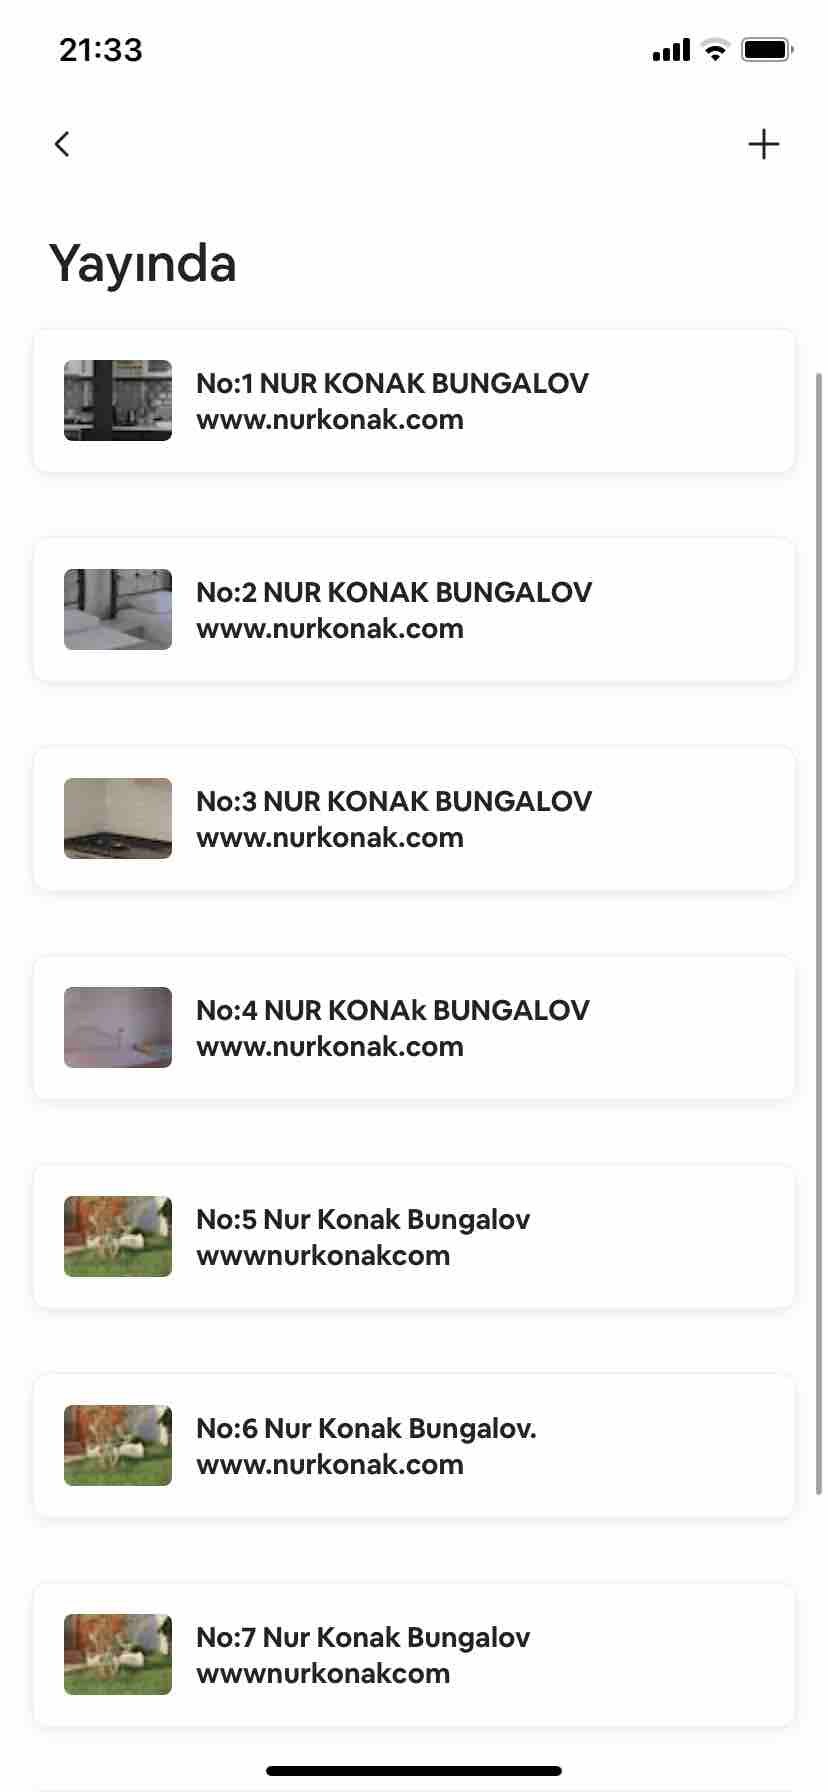 No:5 Nur Konak Bungalov             wwwnurkonakcom